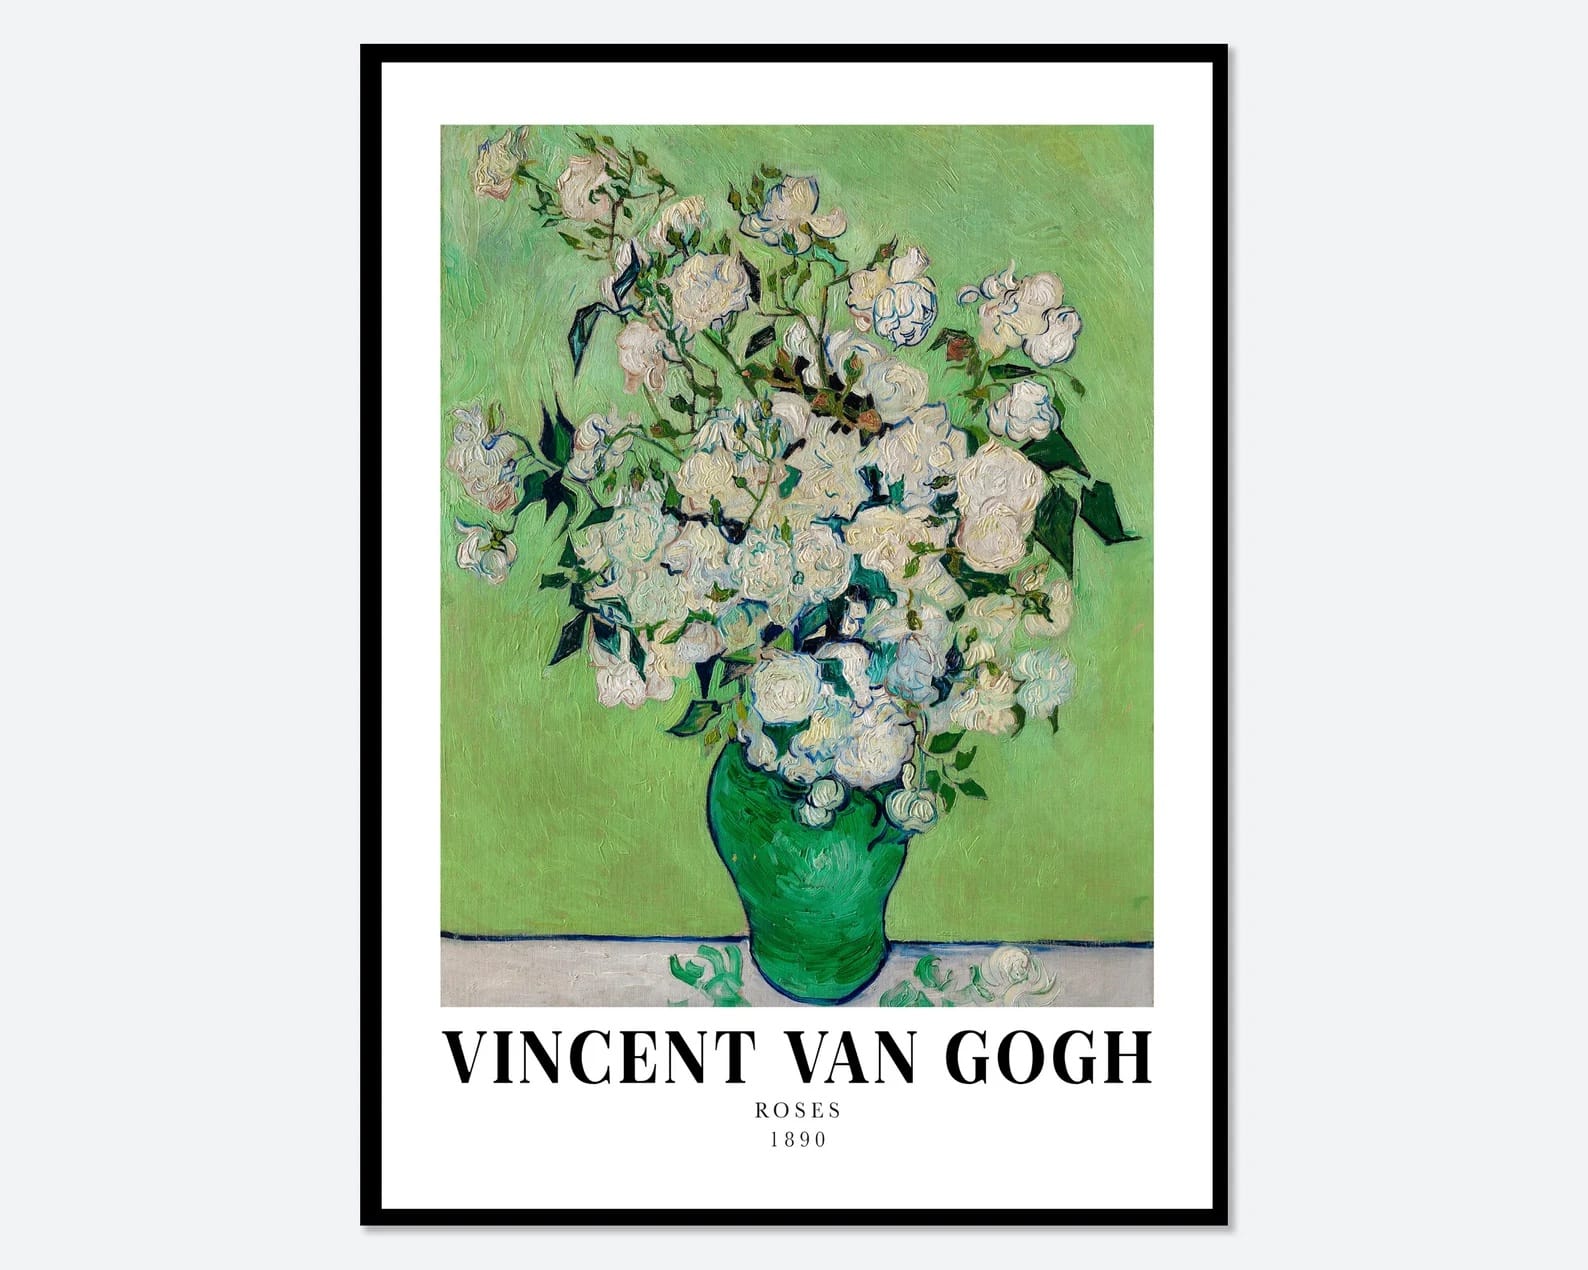 Van Gogh Poster